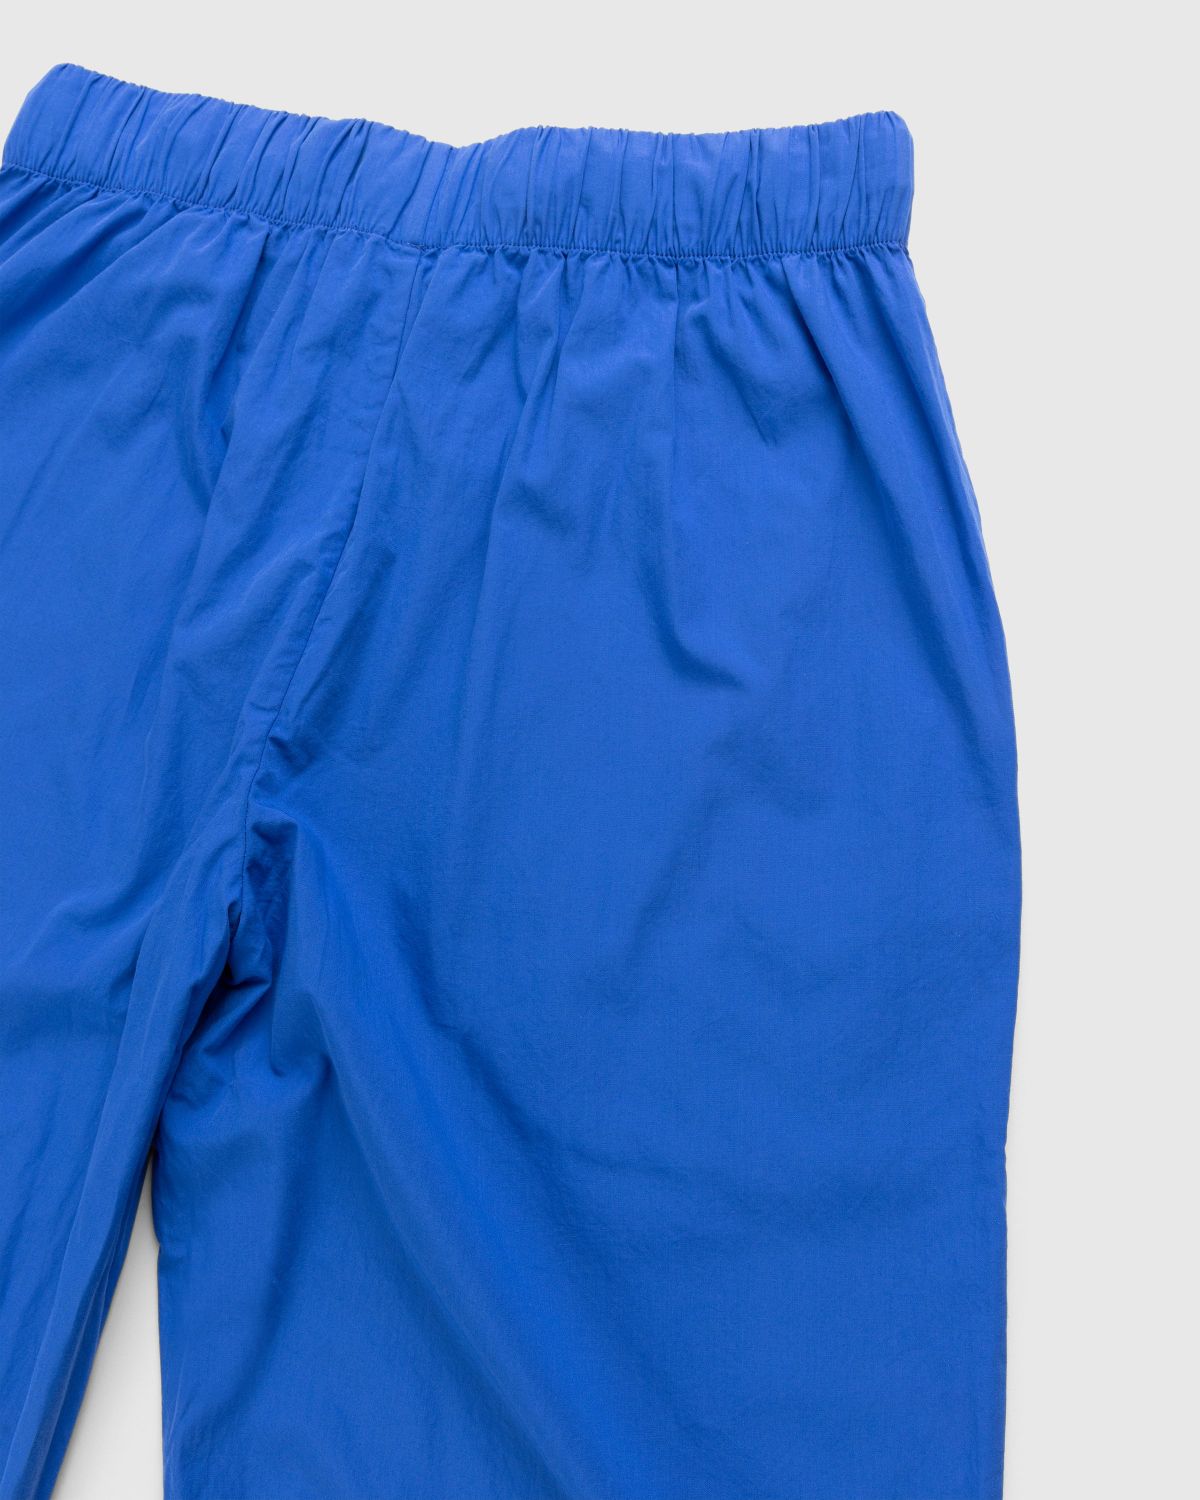 Tekla – Cotton Poplin Pyjamas Pants Royal Blue - Loungewear - Blue - Image 3